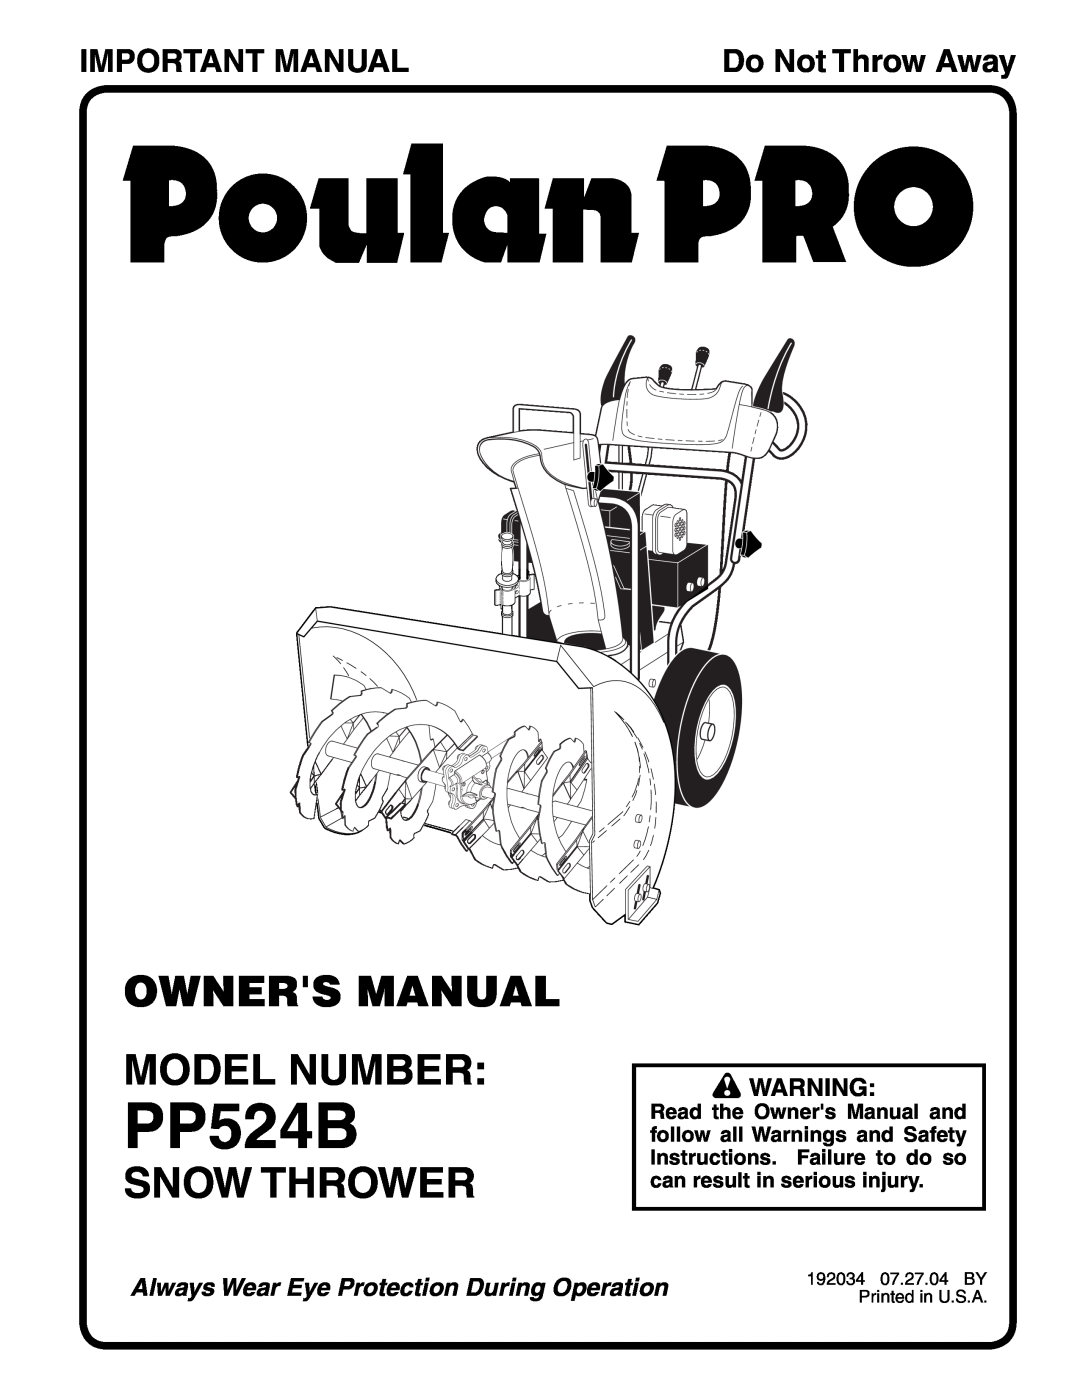 Poulan 192034 owner manual Snow Thrower, Important Manual, PP524B, Do Not Throw Away 